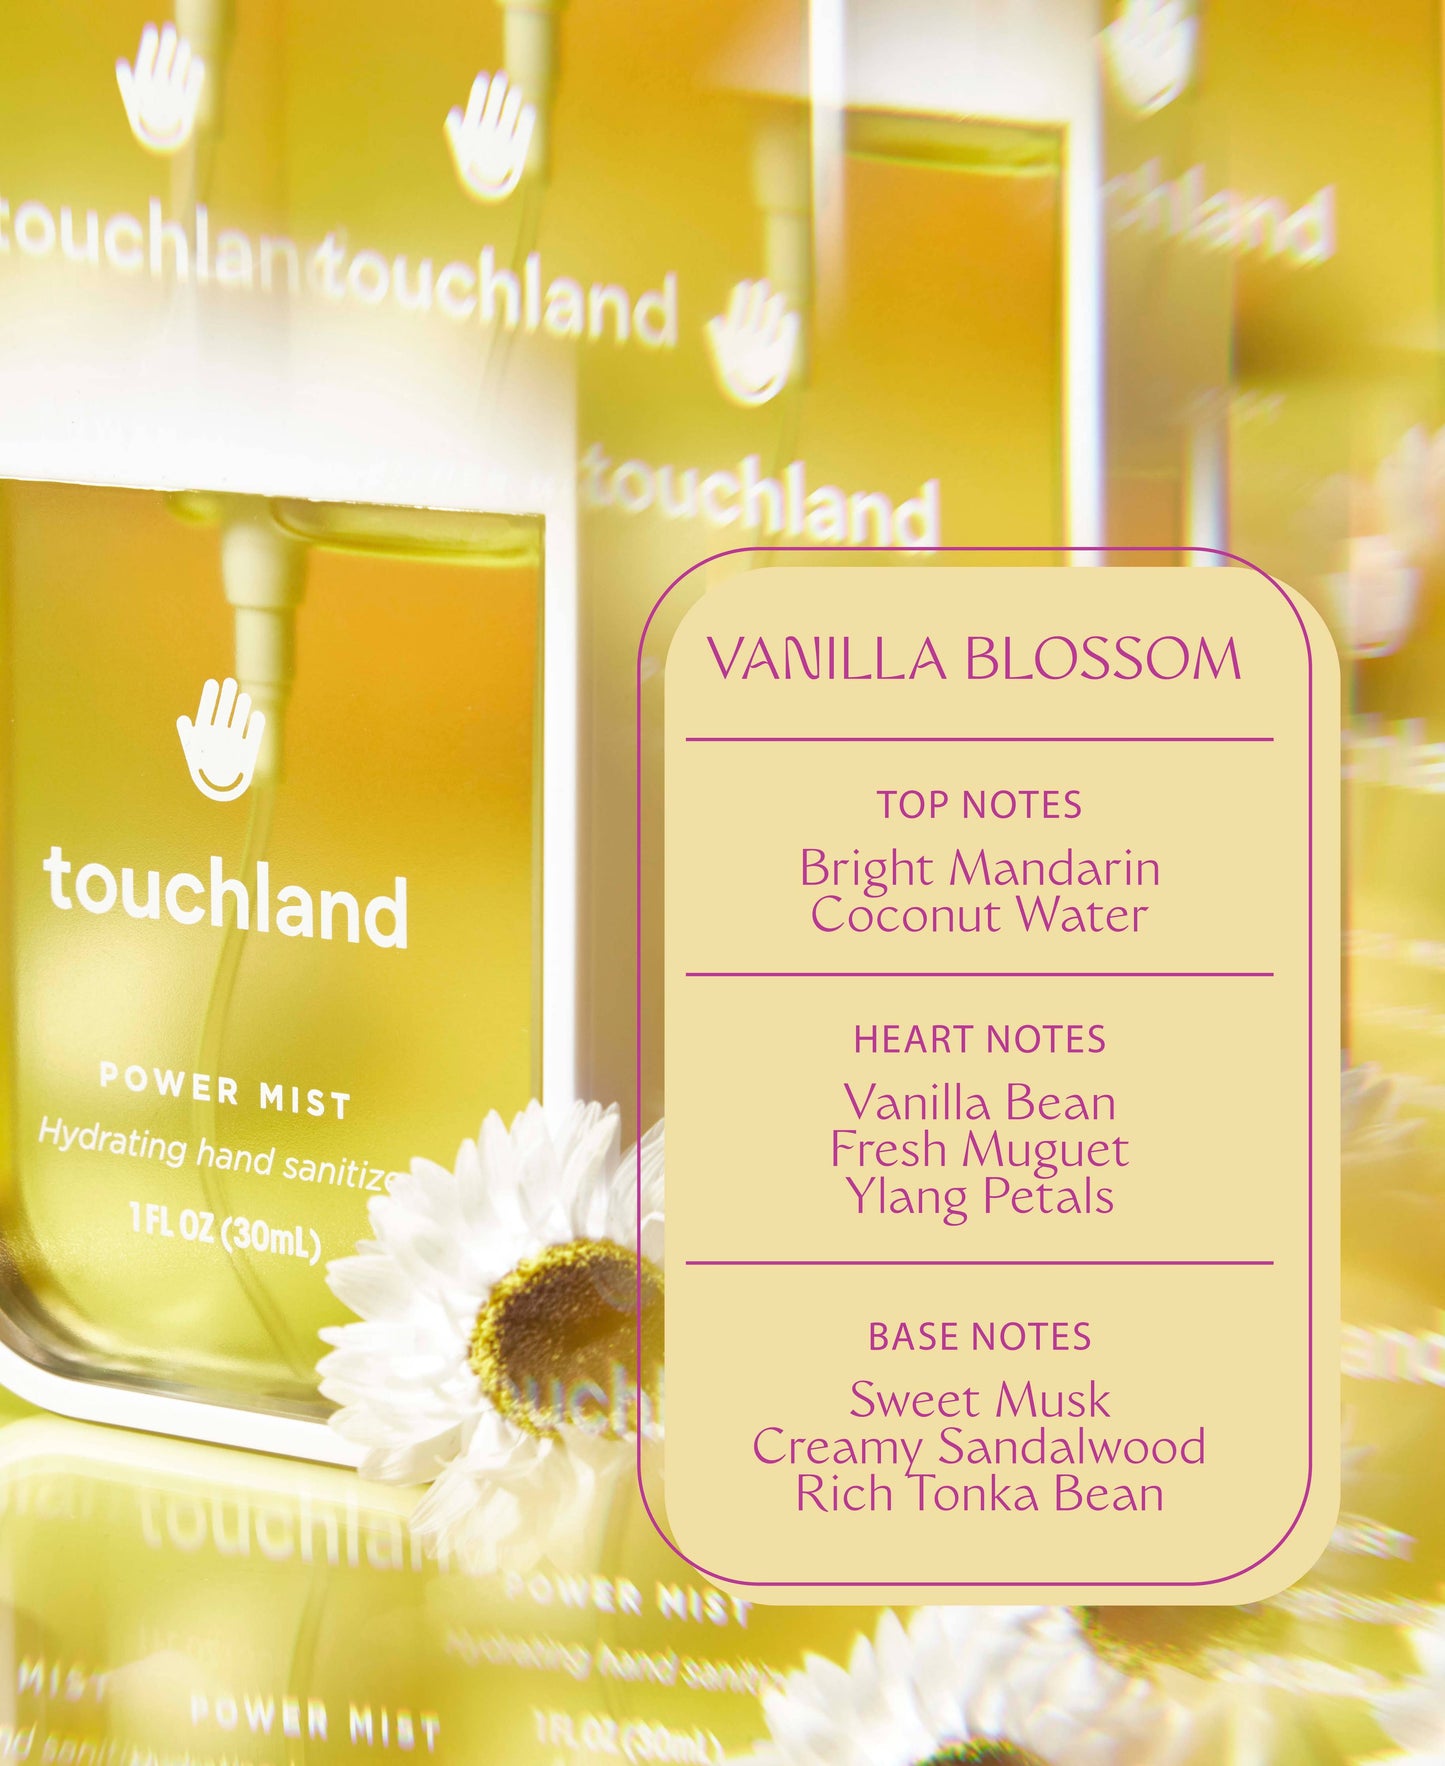 Touchland Power Mist Vanilla Blossom